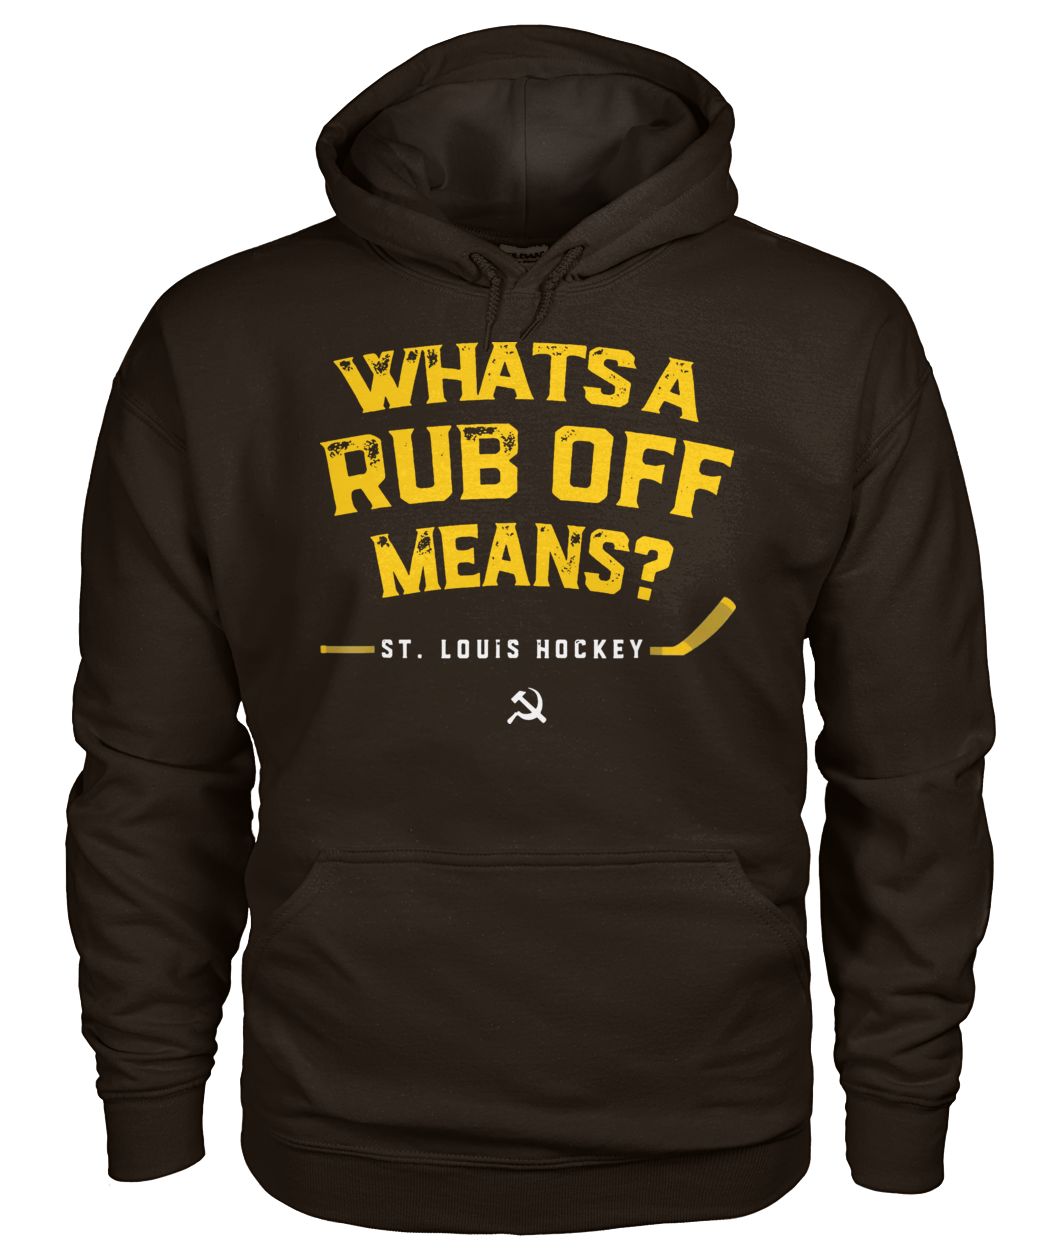 What's a rub off means st louis hockey gildan hoodie